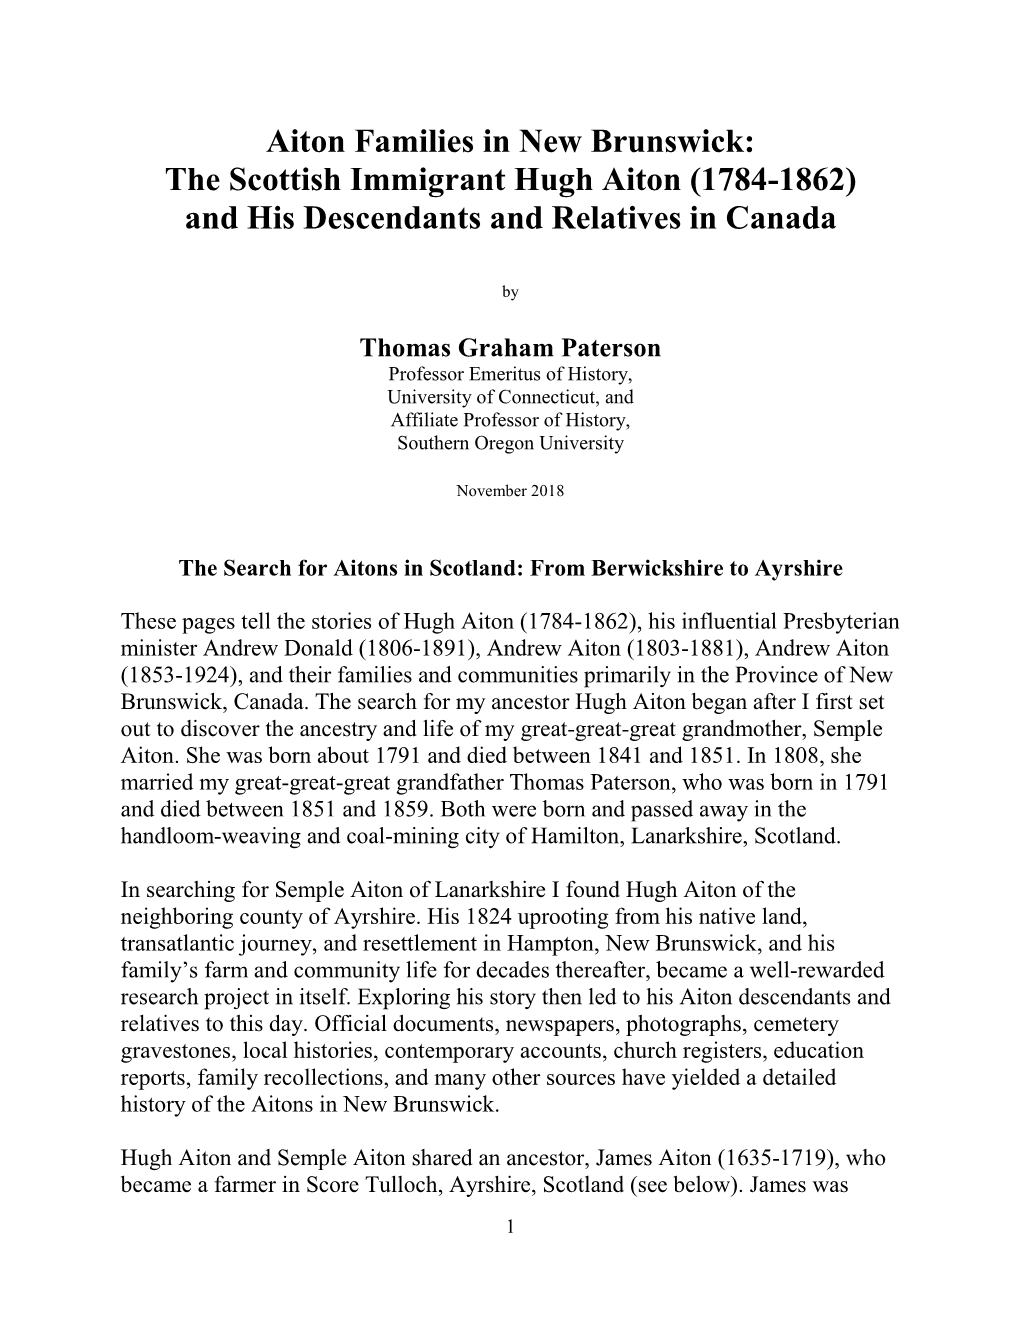 Aiton Families in New Brunswick: the Scottish Immigrant Hugh Aiton (1784-1862) and His Descendants and Relatives in Canada